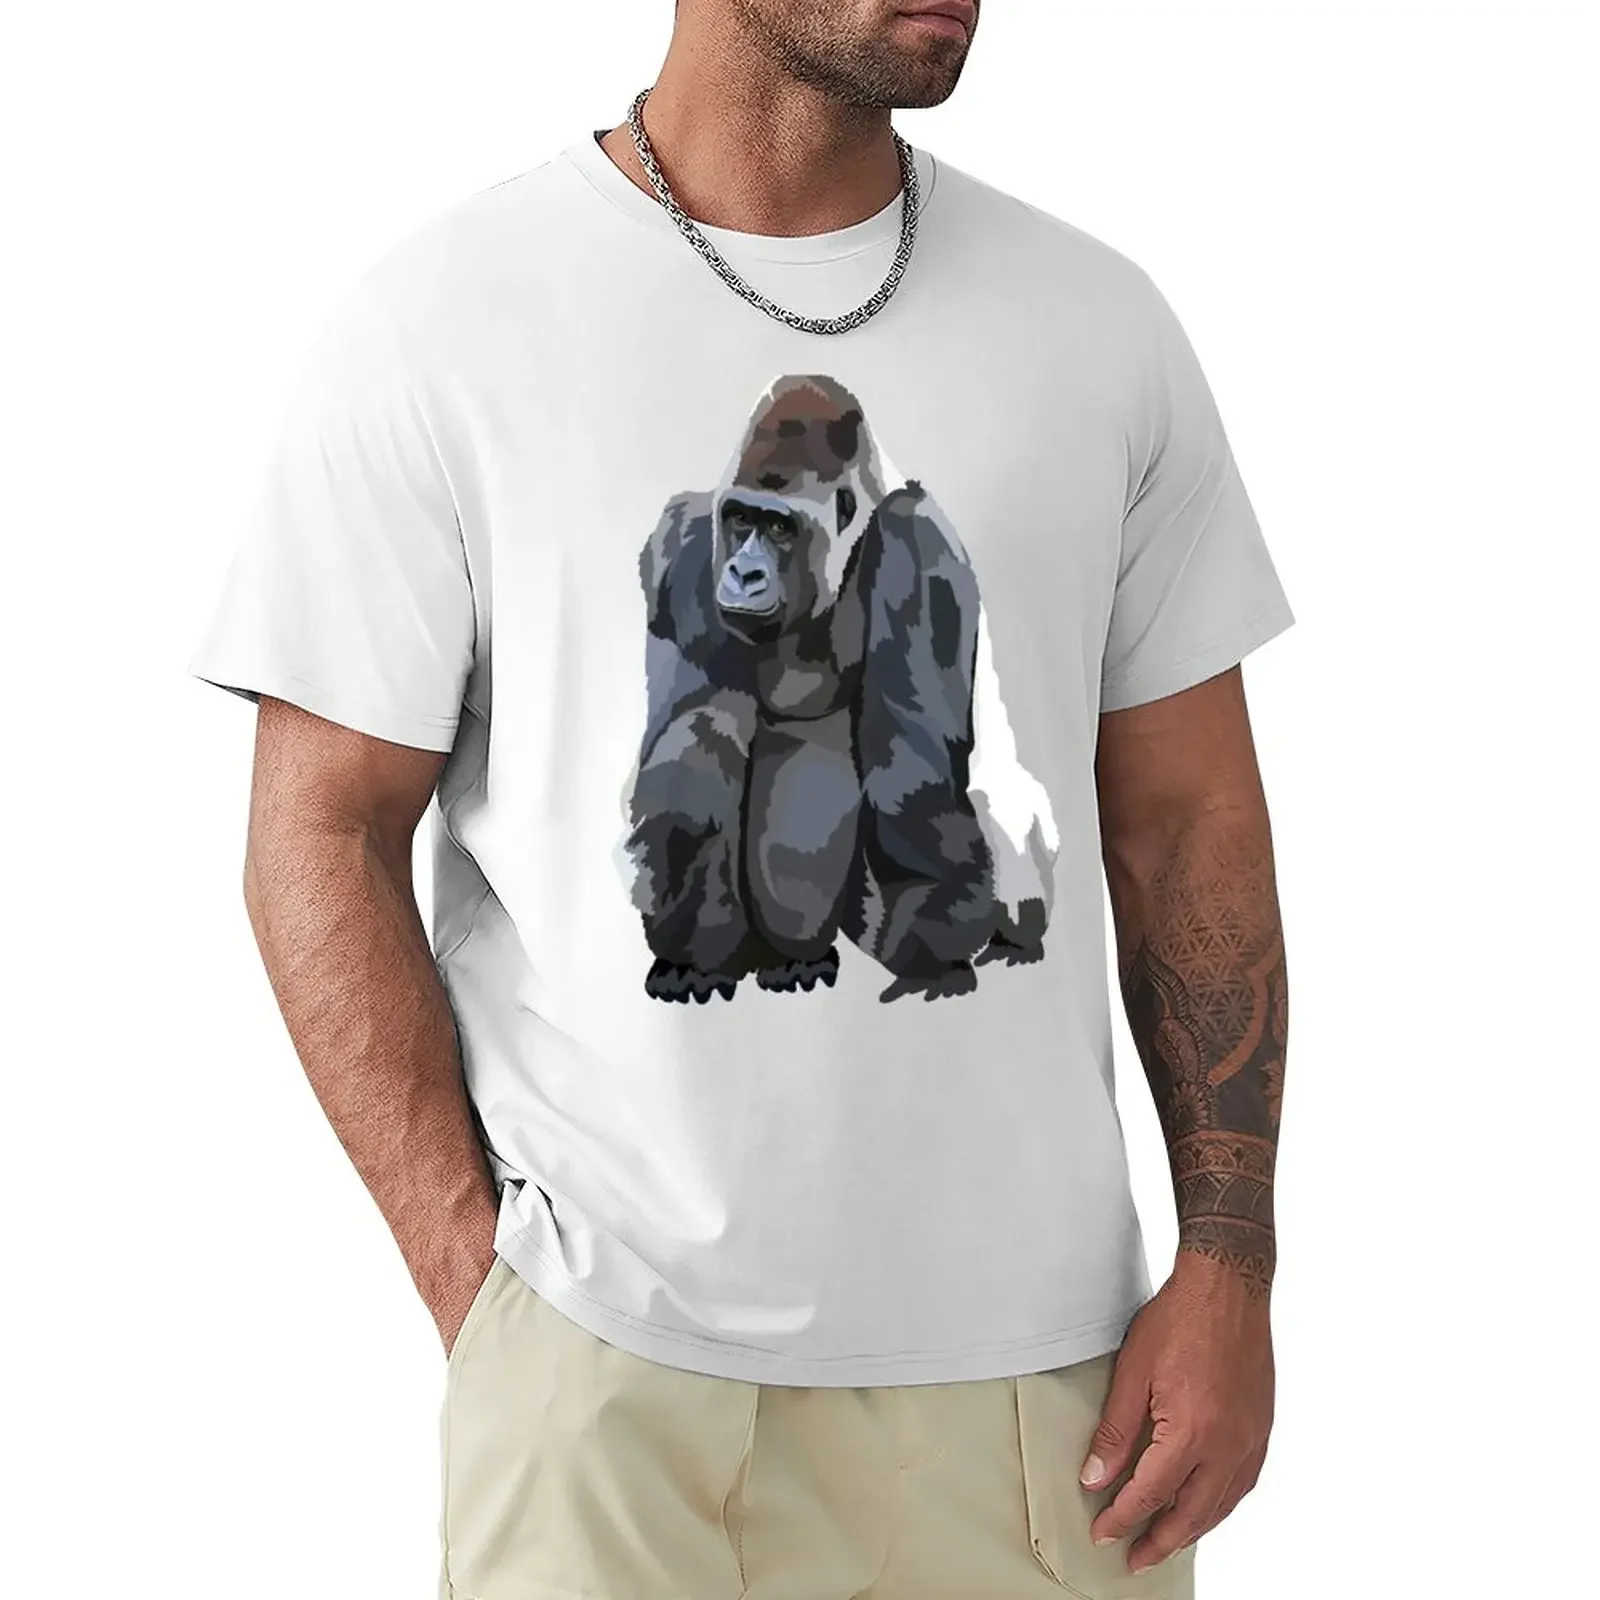 

G is for Gorilla T-Shirt customs design your own blacks plus sizes mens white t shirts